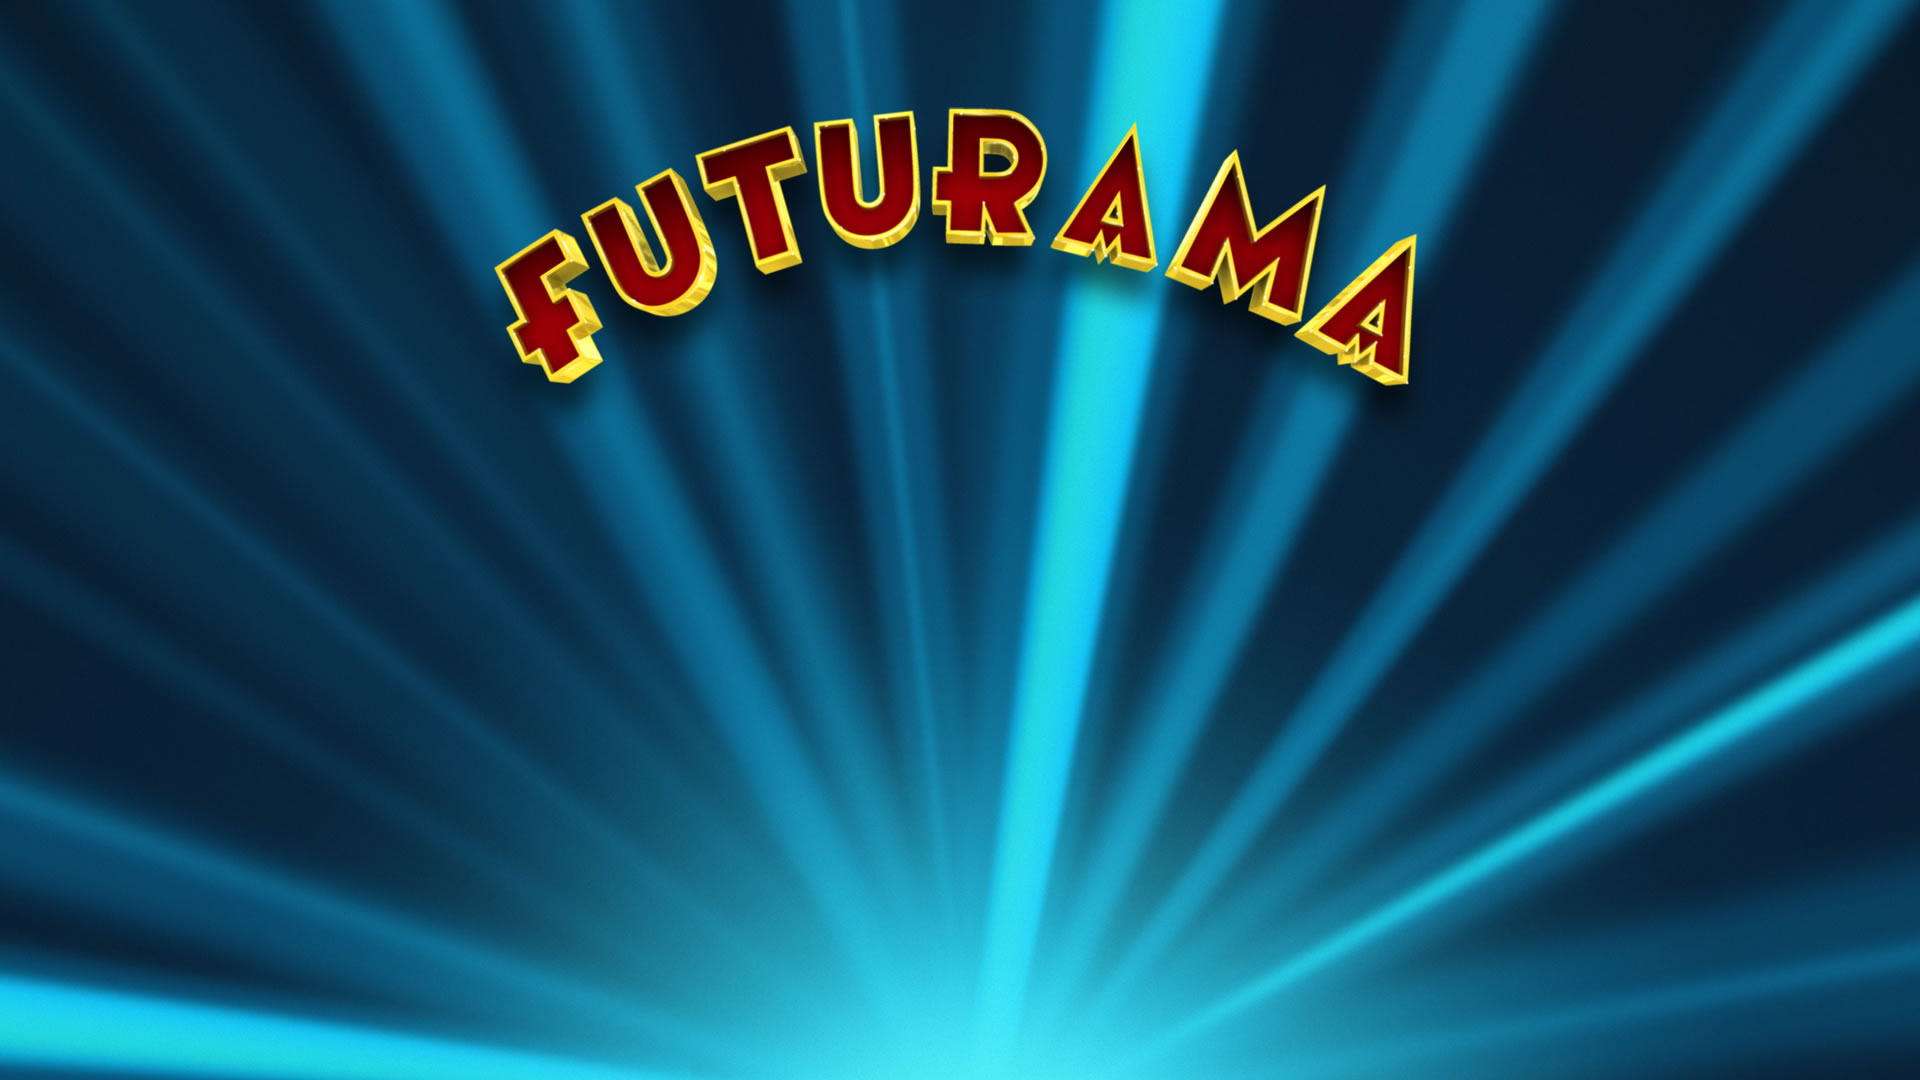 futurama wallpaper hd,blue,light,electric blue,graphics,font